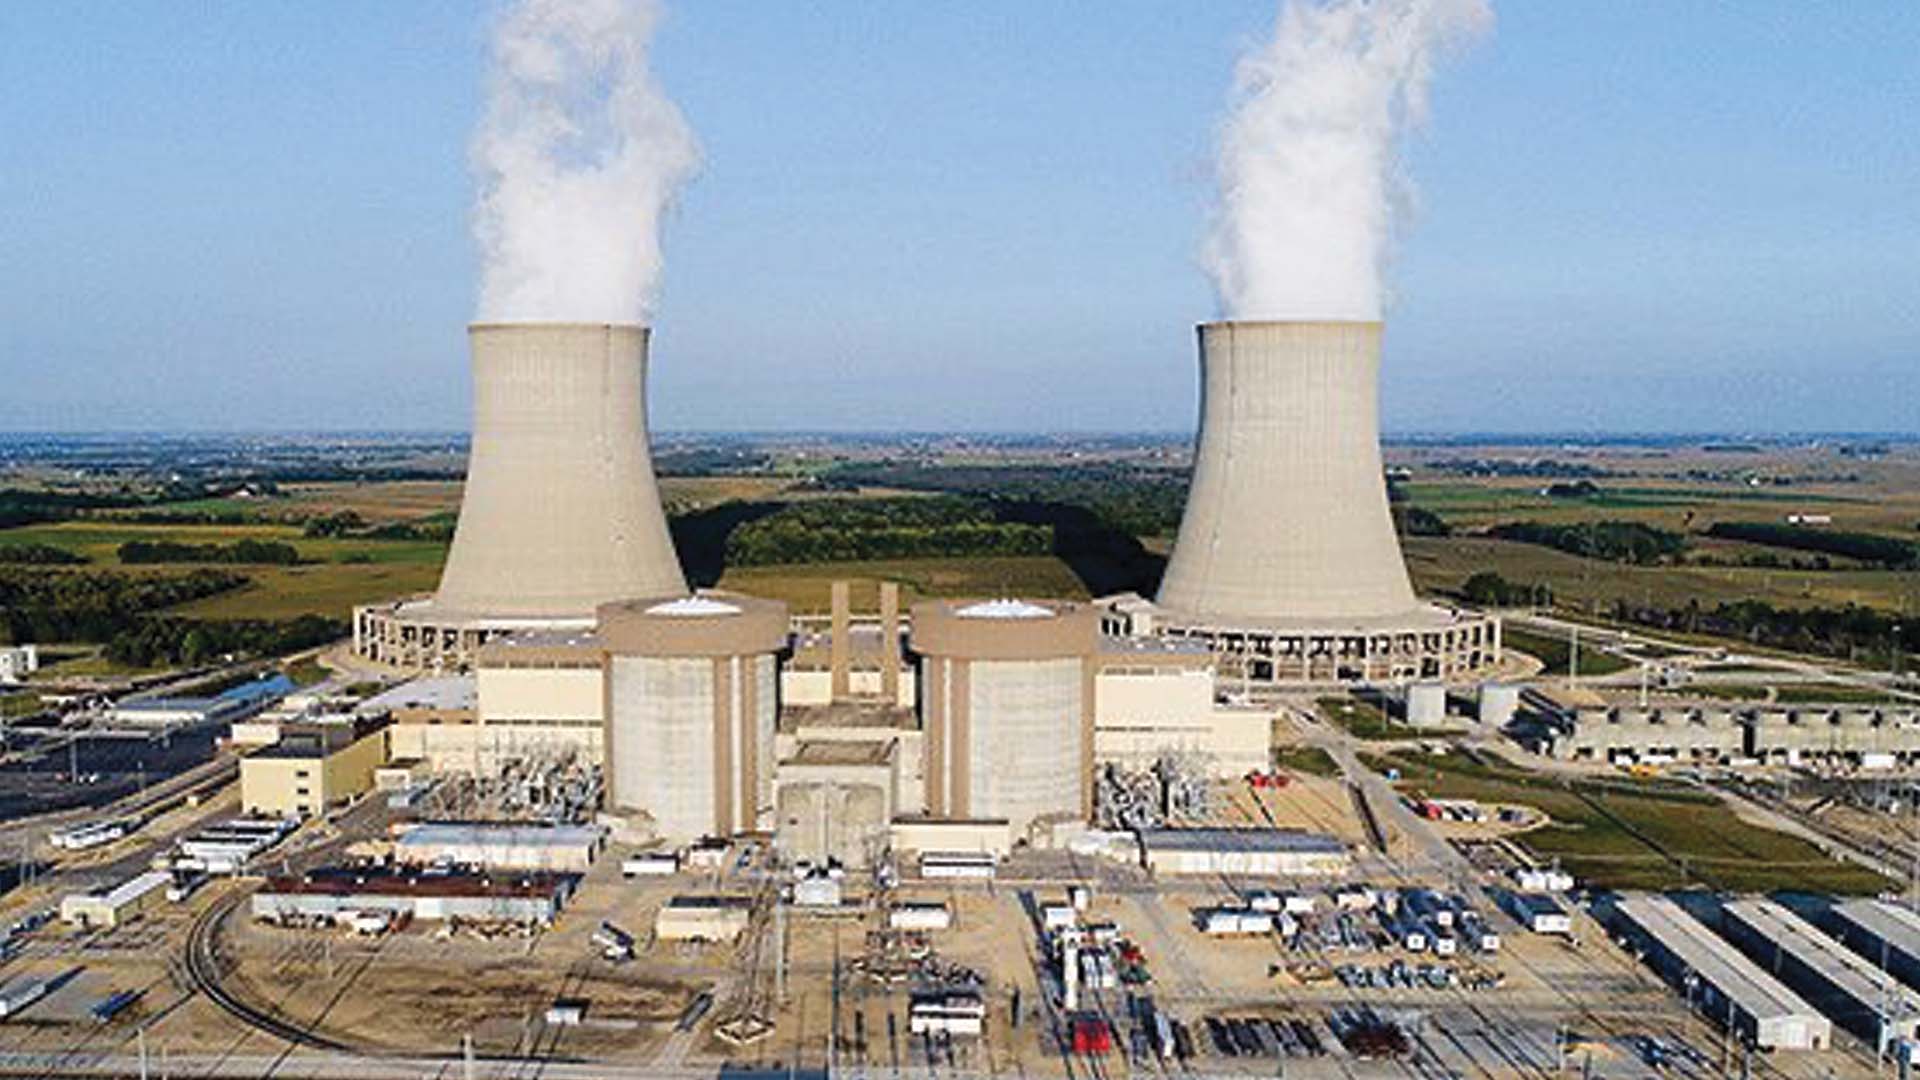 The Byron nuclear power plant